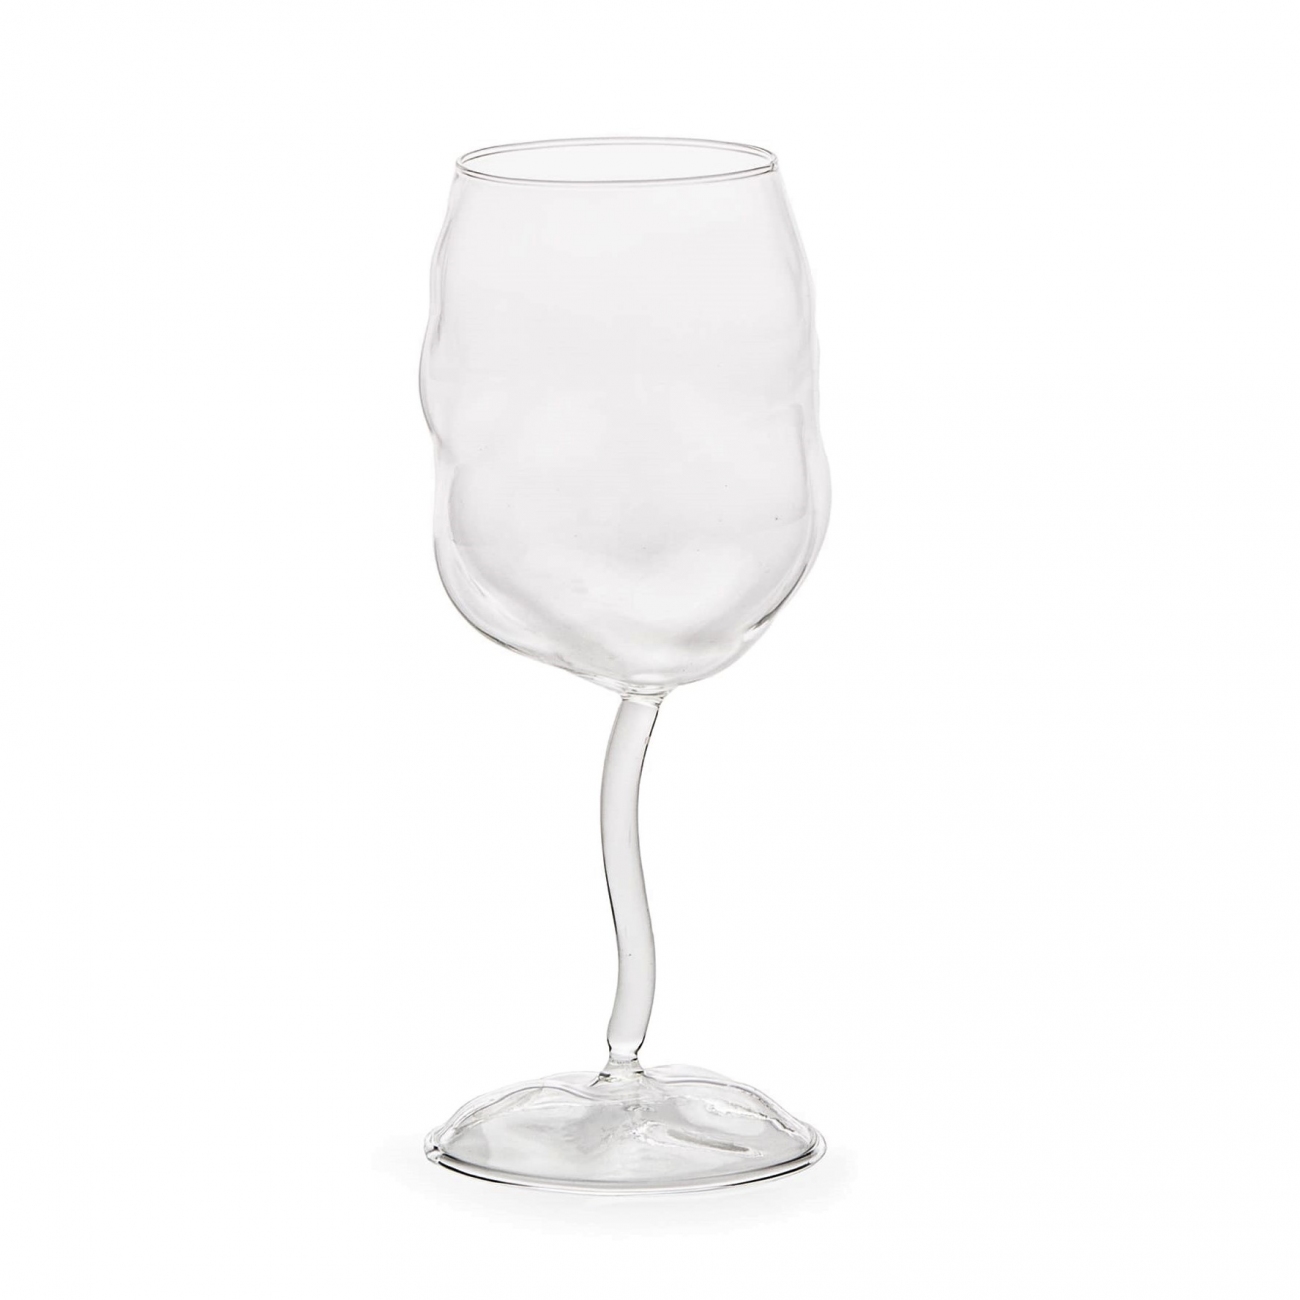 SELETTI GLASS FROM SONNY WINE GLASS